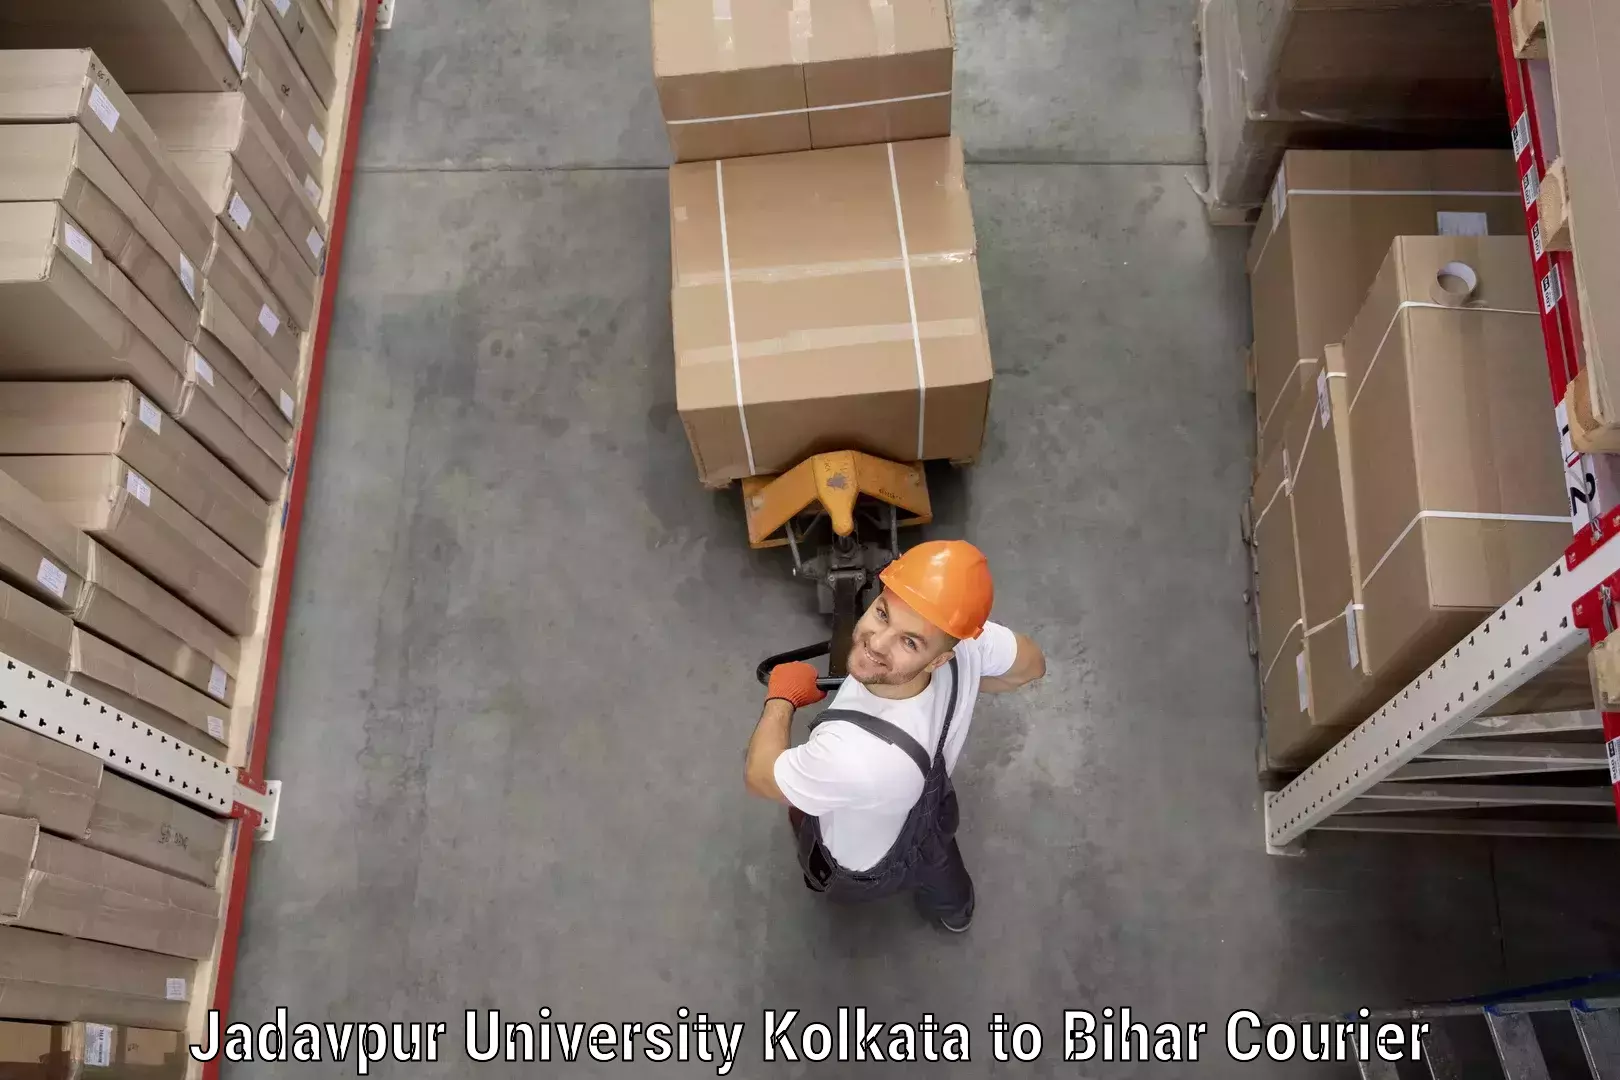 Global logistics network Jadavpur University Kolkata to Bihar